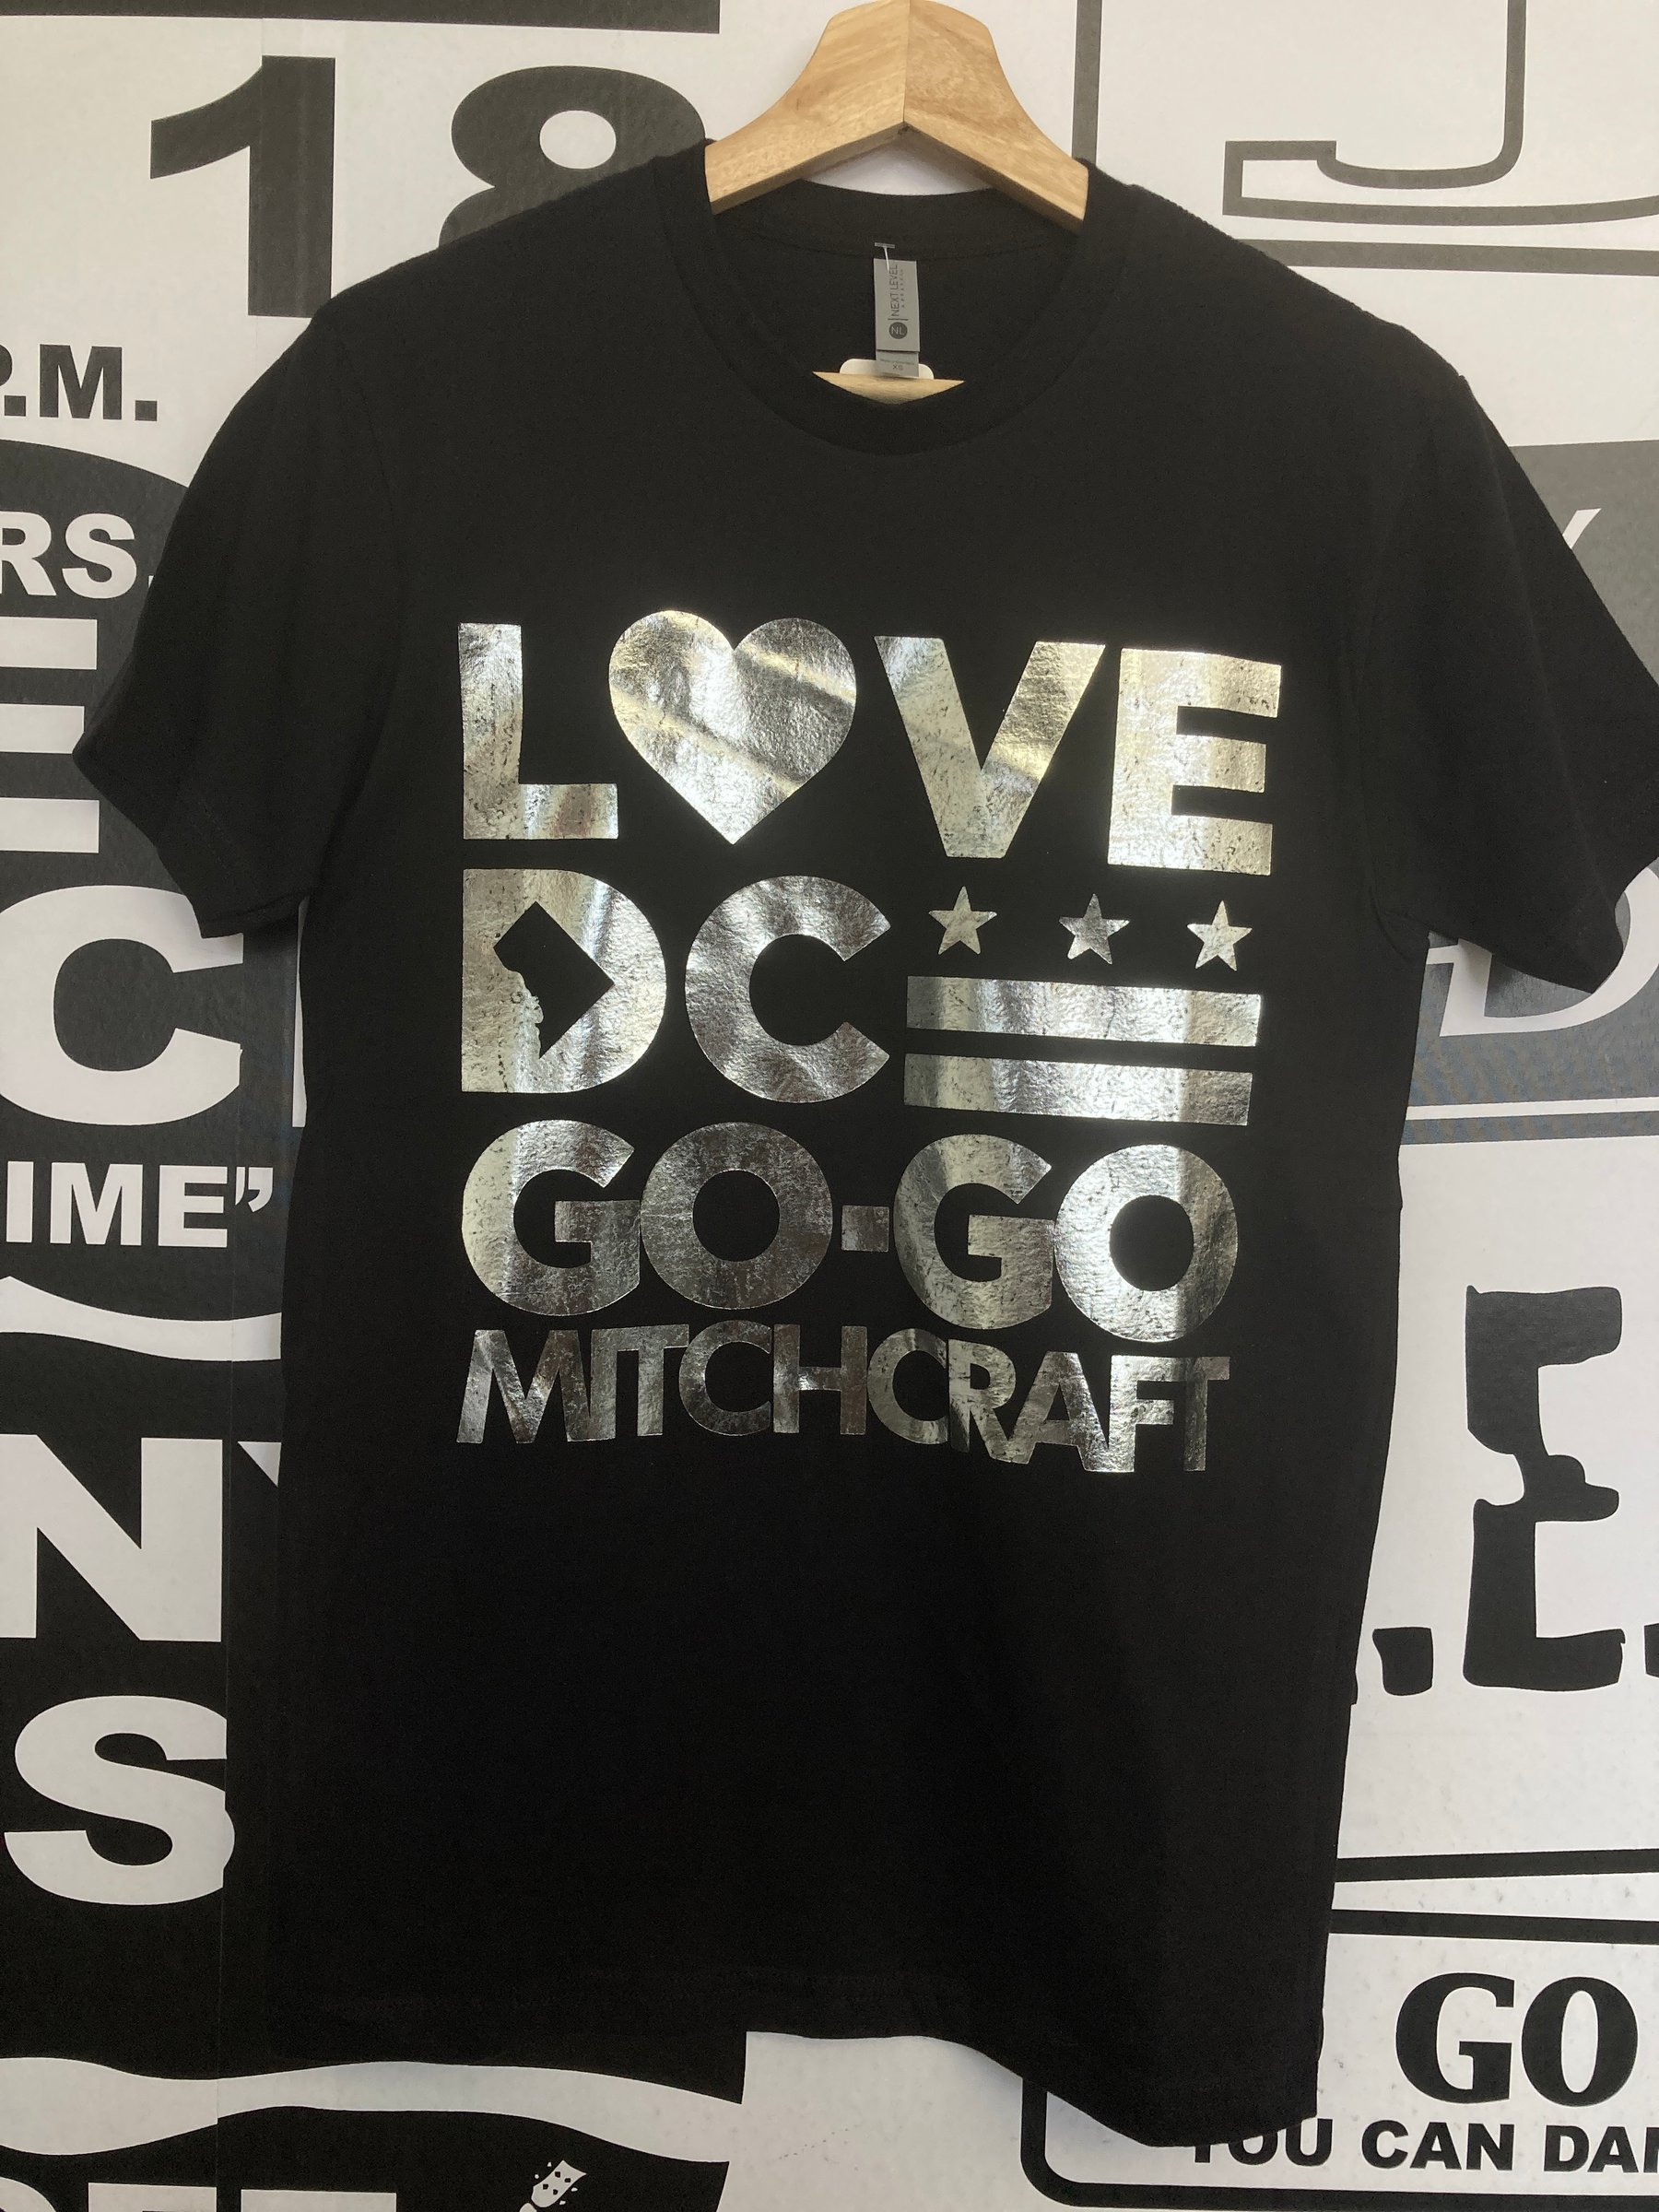 Love DC Gogo' Men's T-Shirt